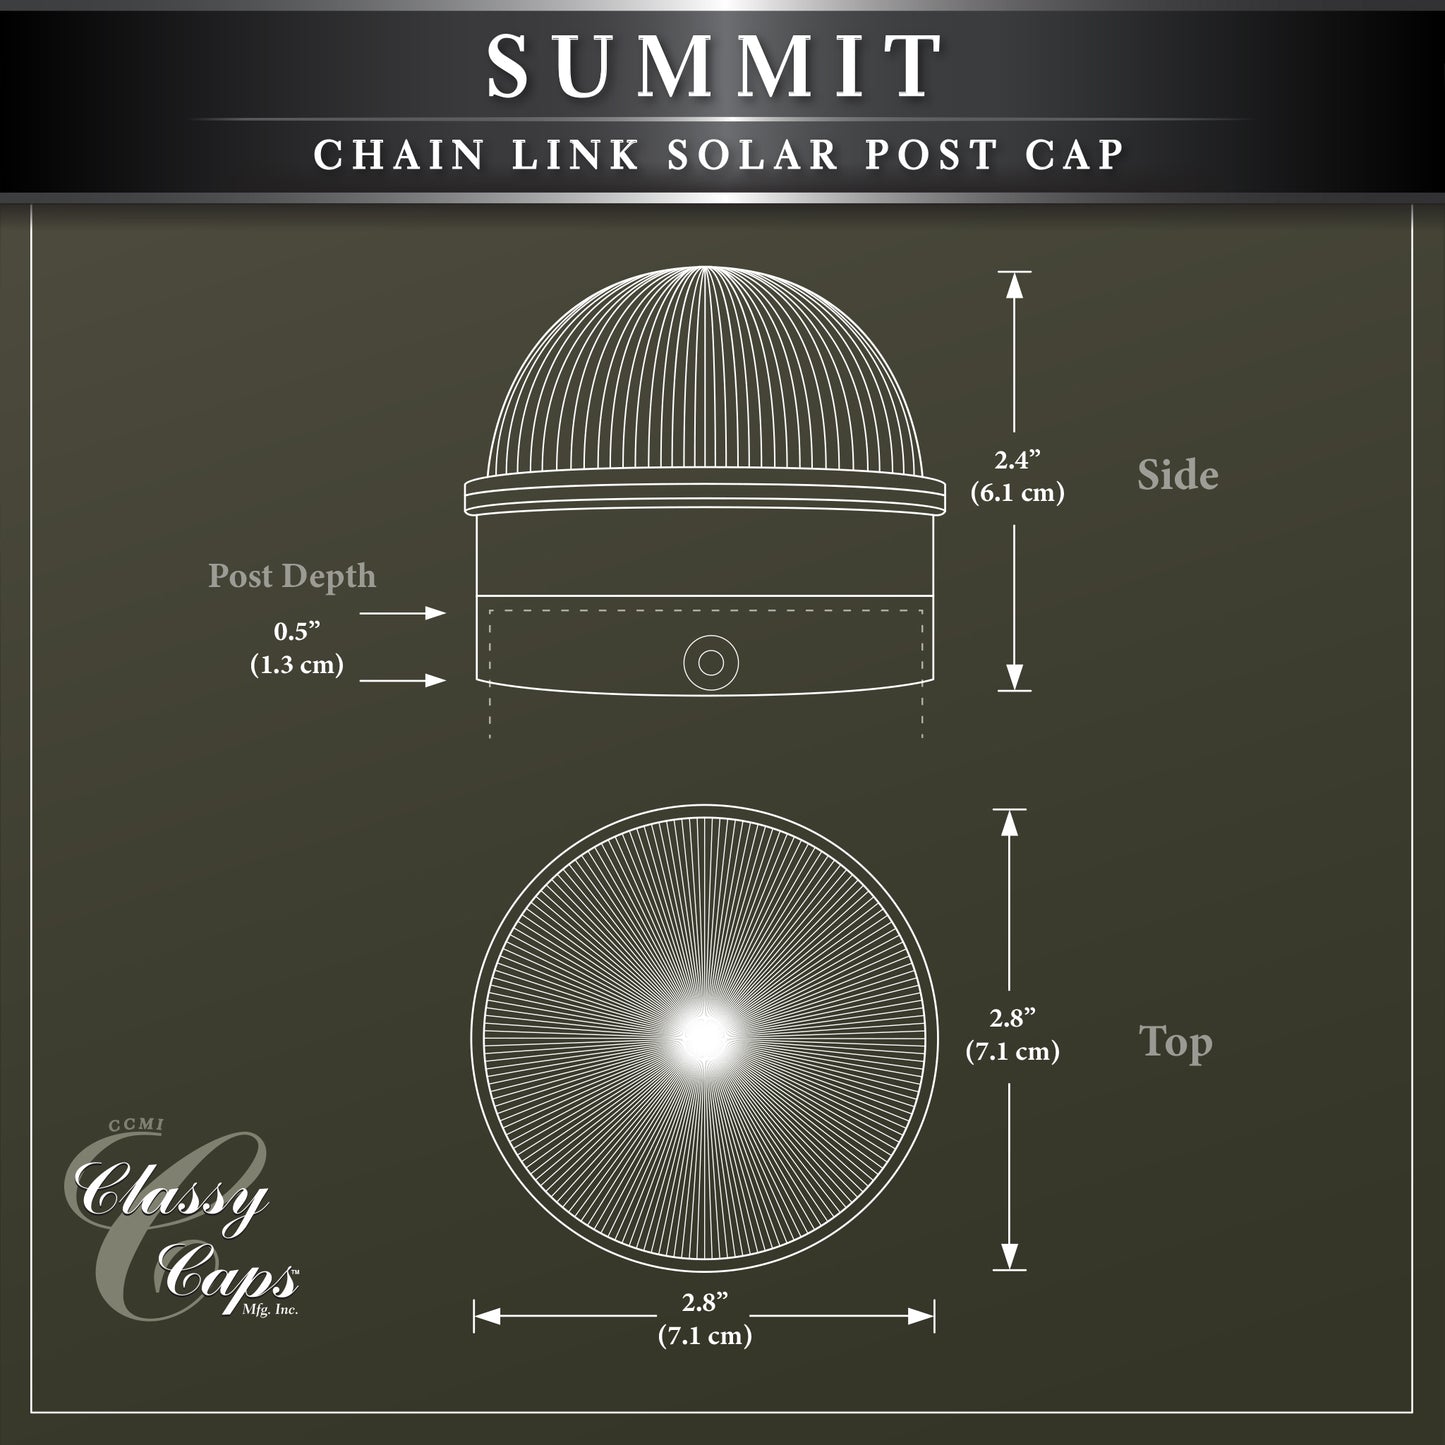 Silver Chainlink Summit Solar Post Cap